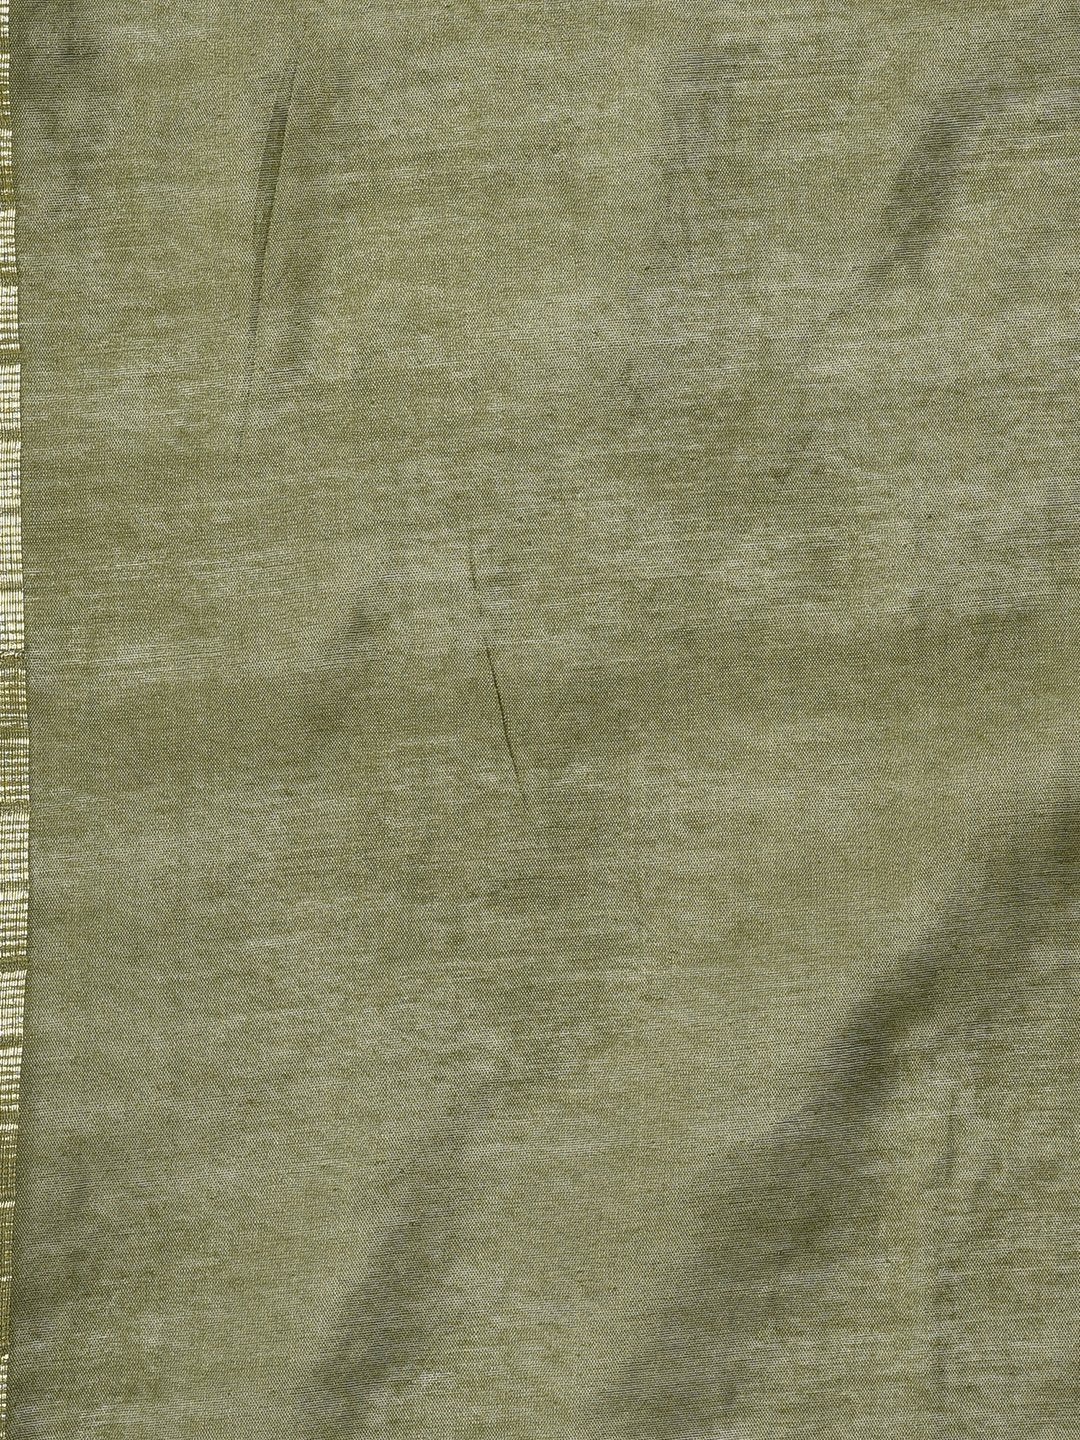 Handloom Saree In Olive Green Color